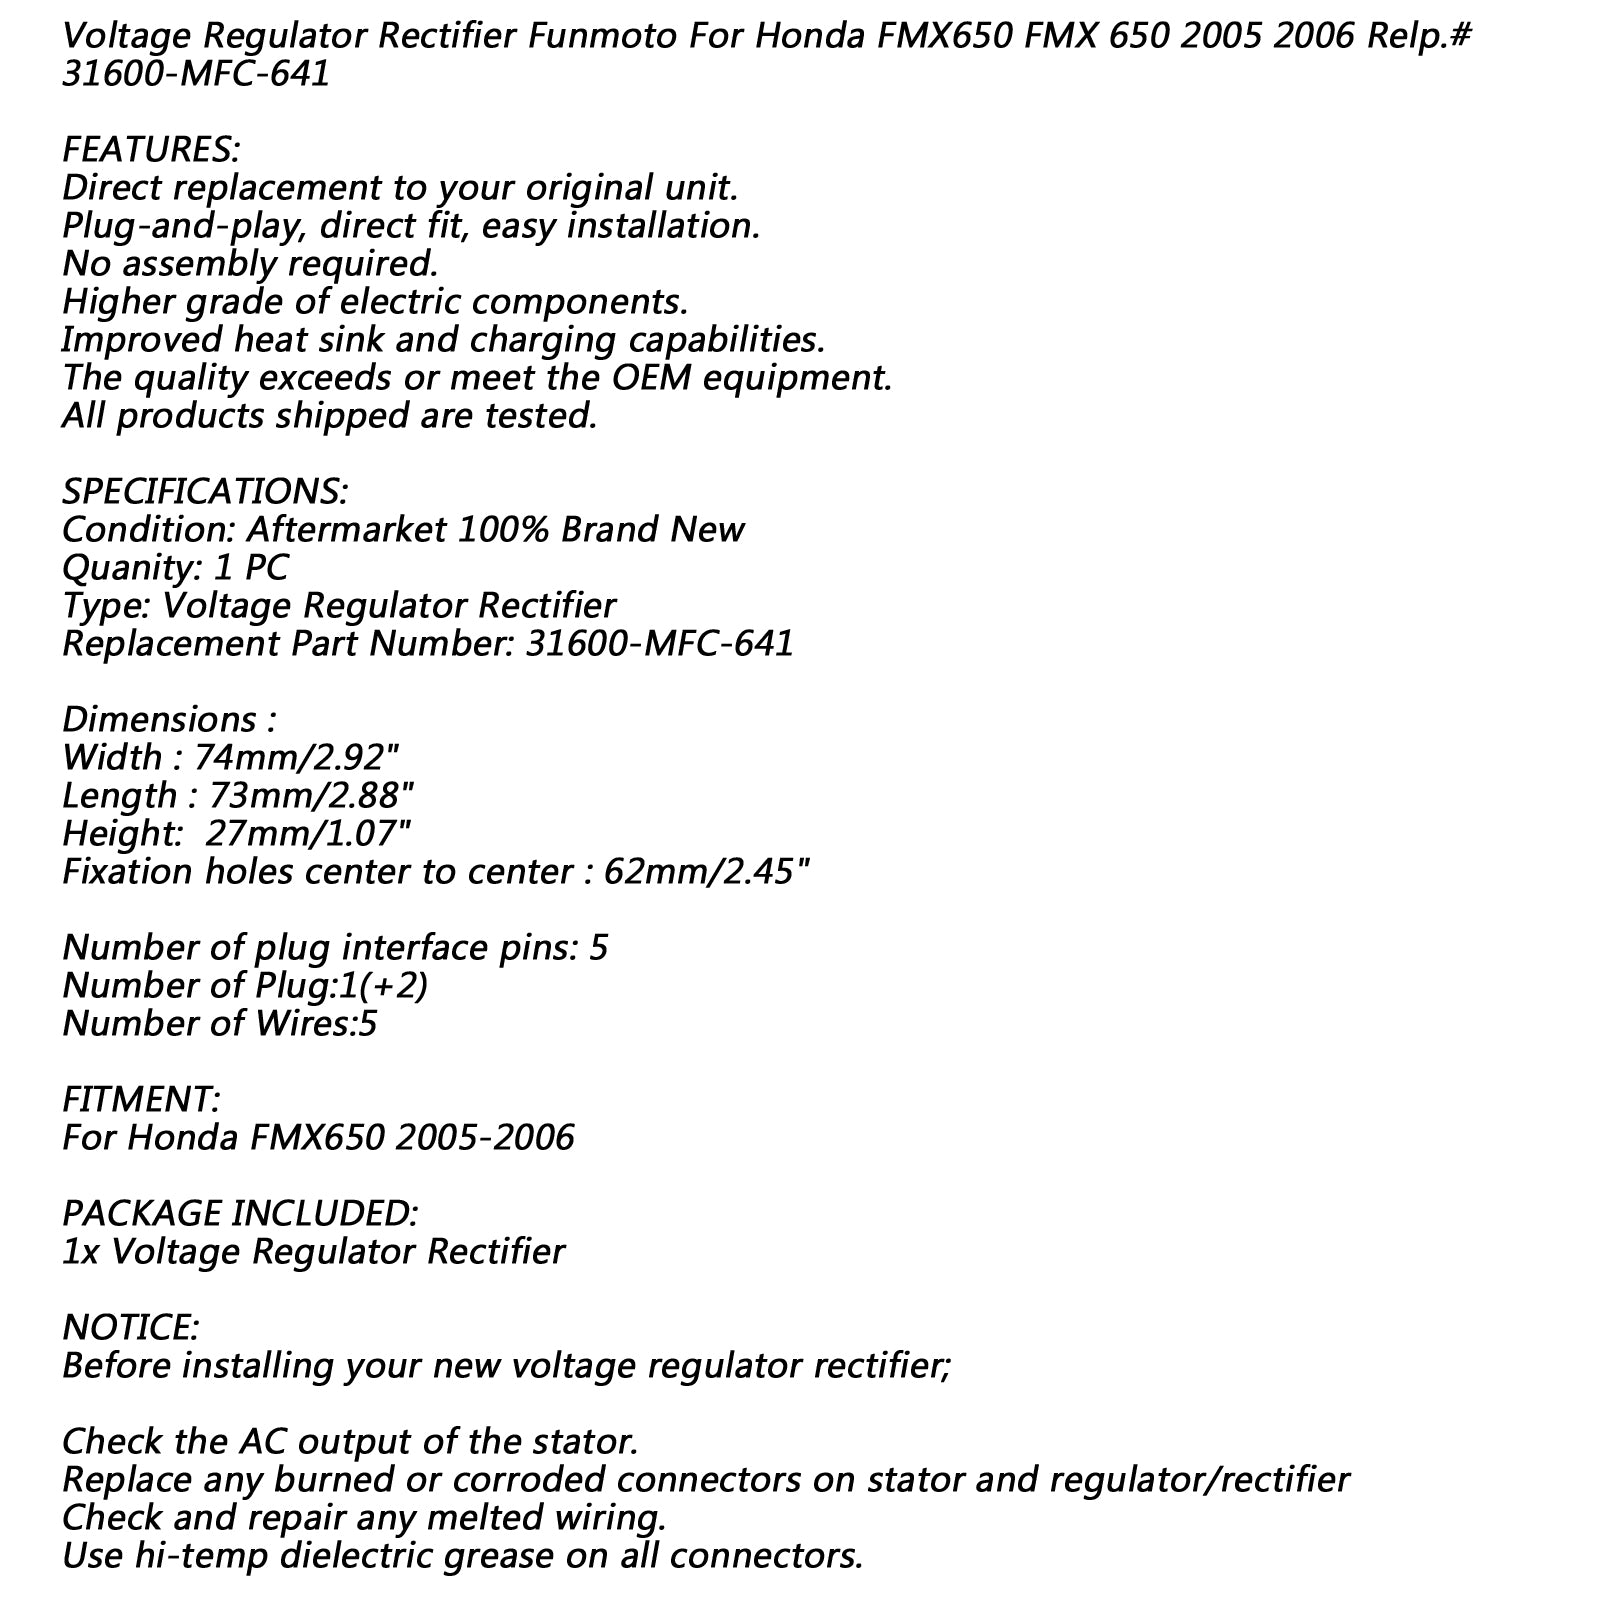 Voltage Rectifier Regulator For Honda FMX650 2005-2006 Repl.# 31600-MFC-641